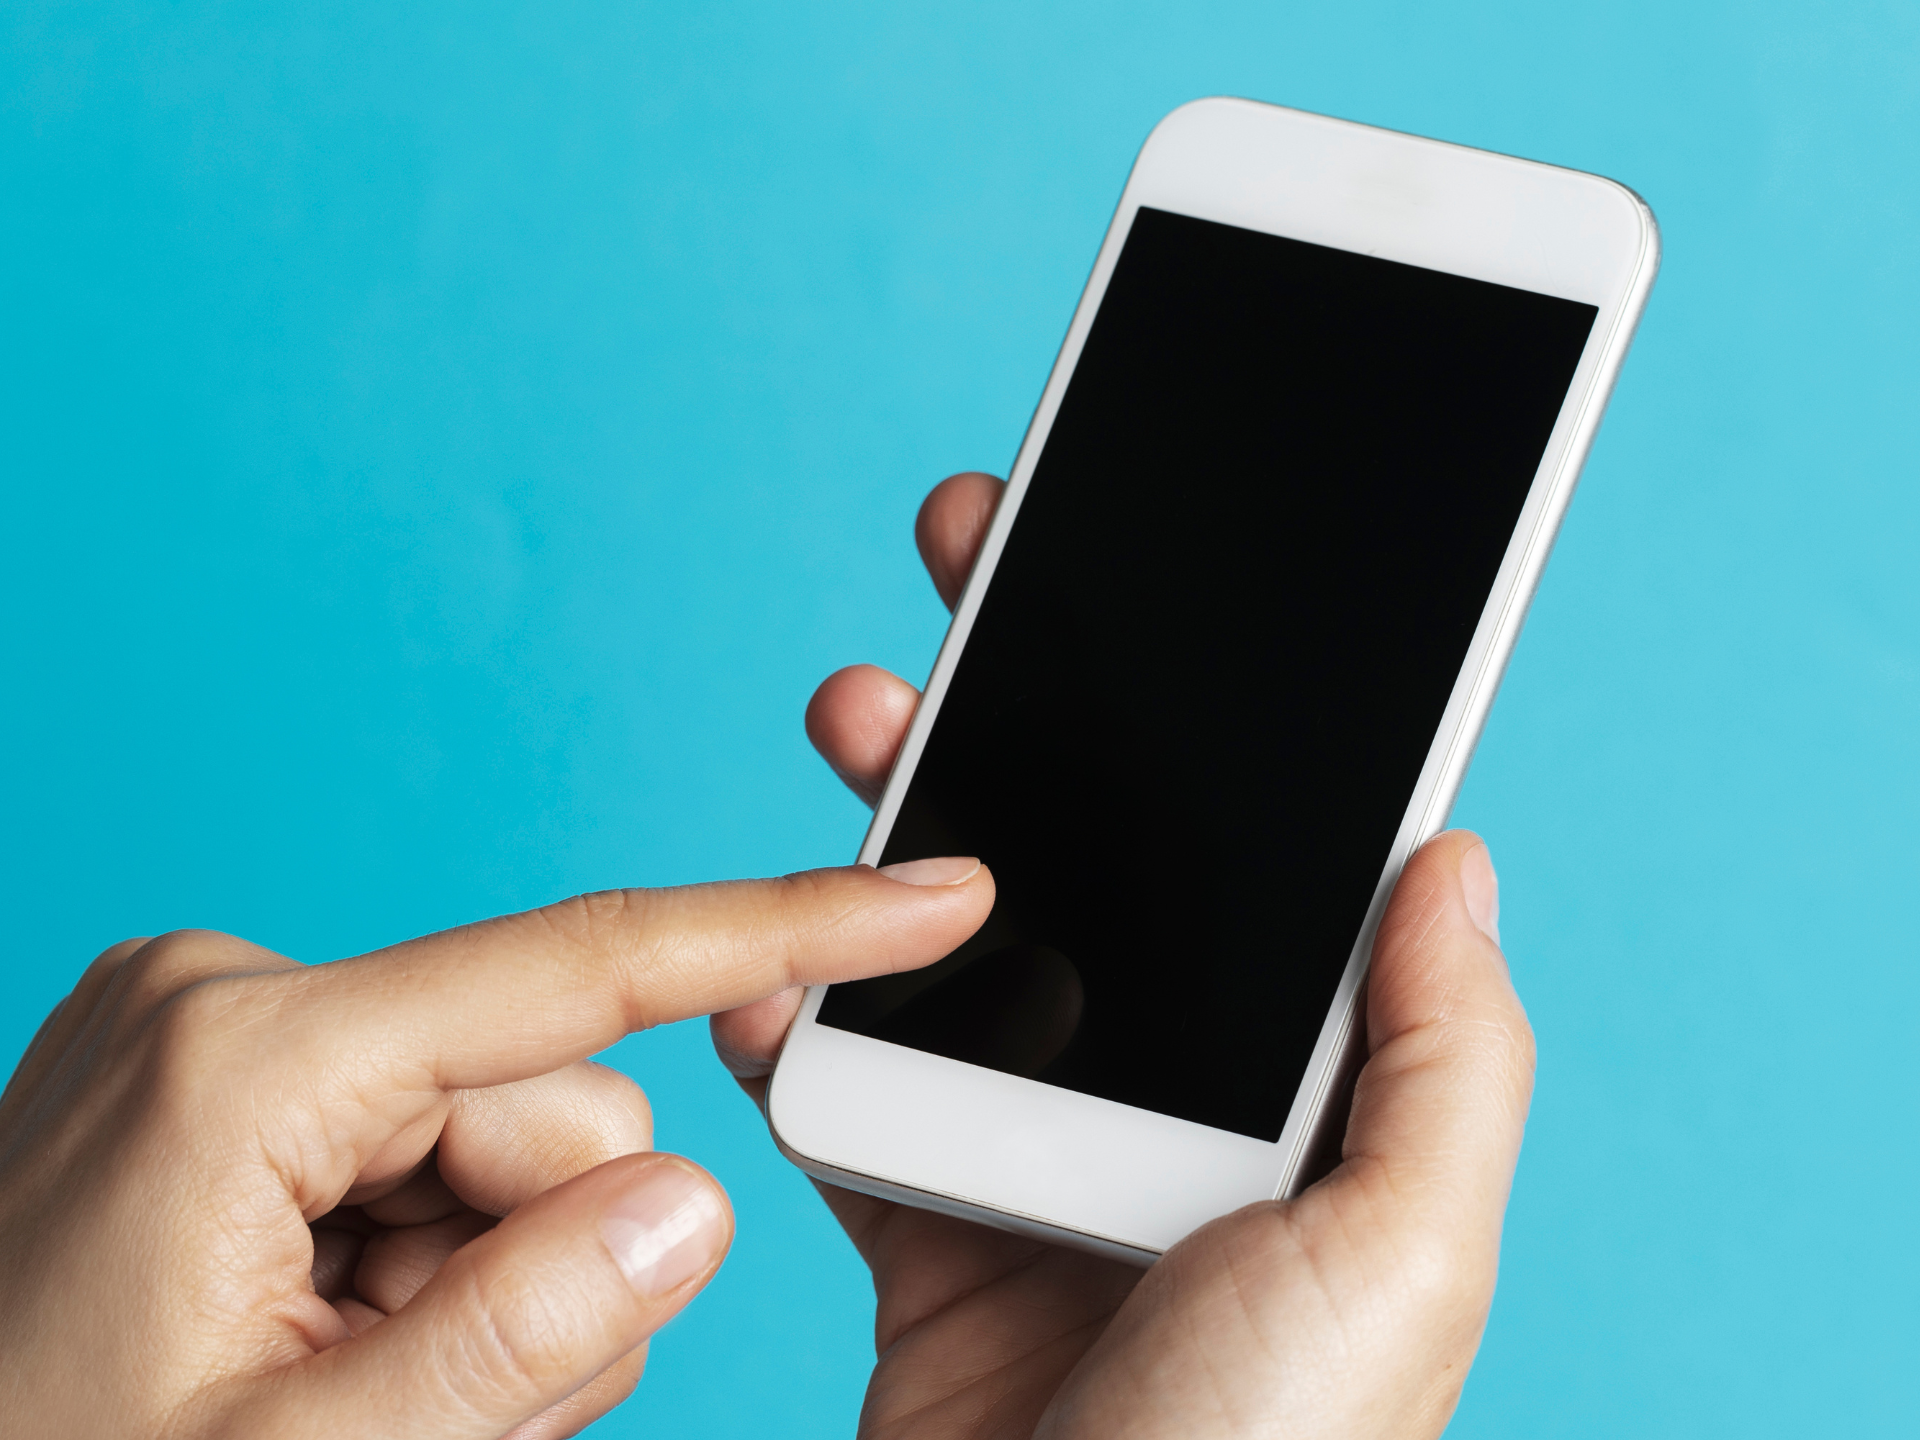 LI-finger-touching-smartphone-display